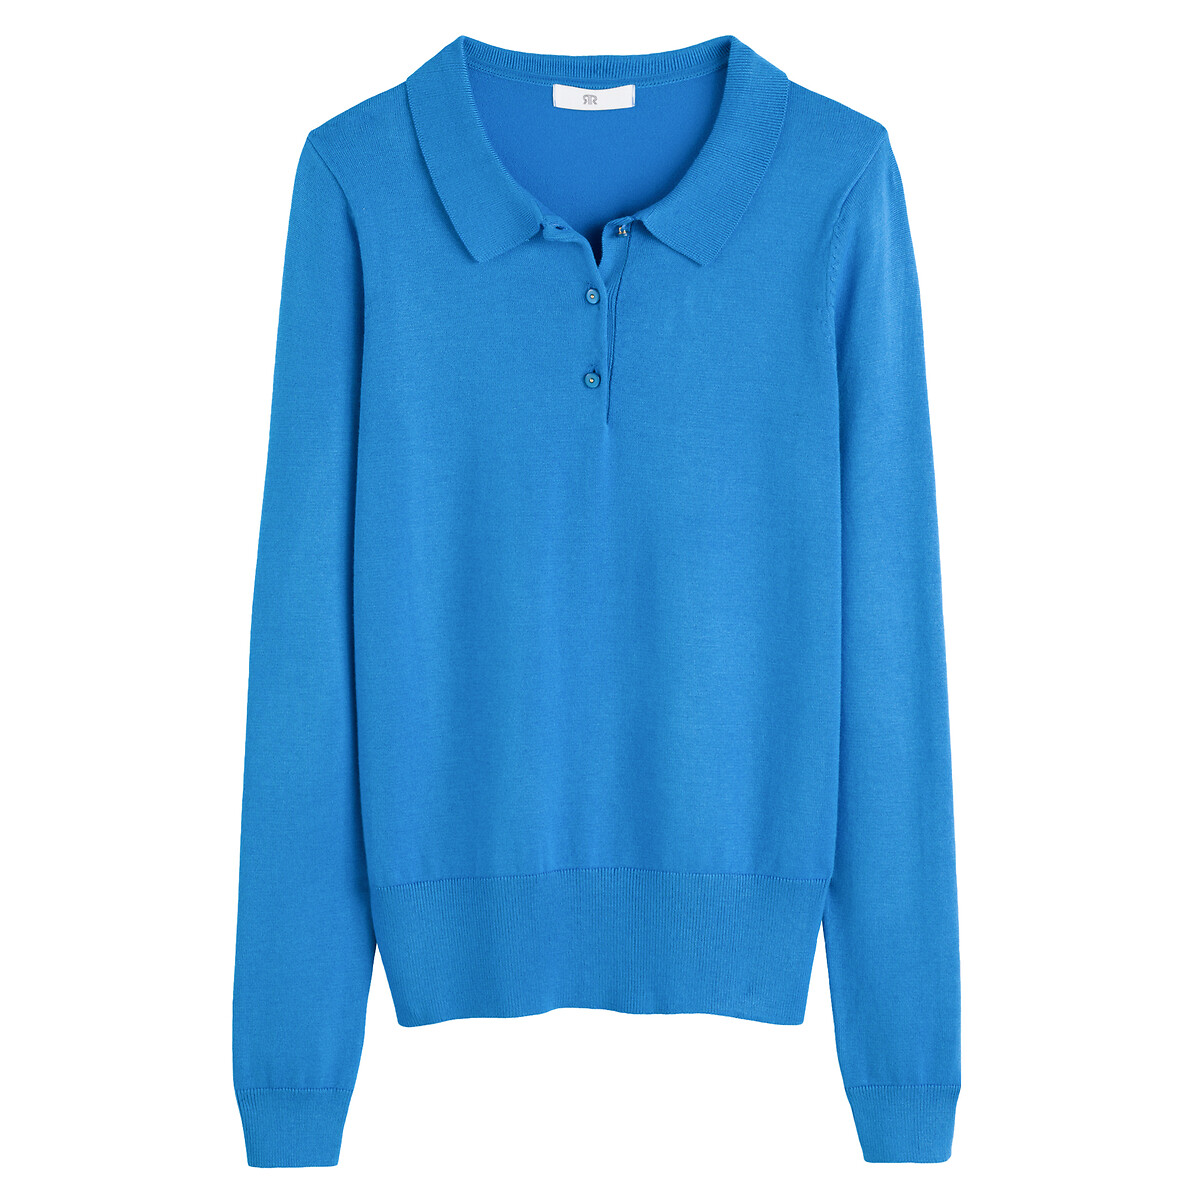 Пуловер С воротником-поло и длинными рукавами из тонкого трикотажа XS синий LaRedoute, размер XS - фото 5